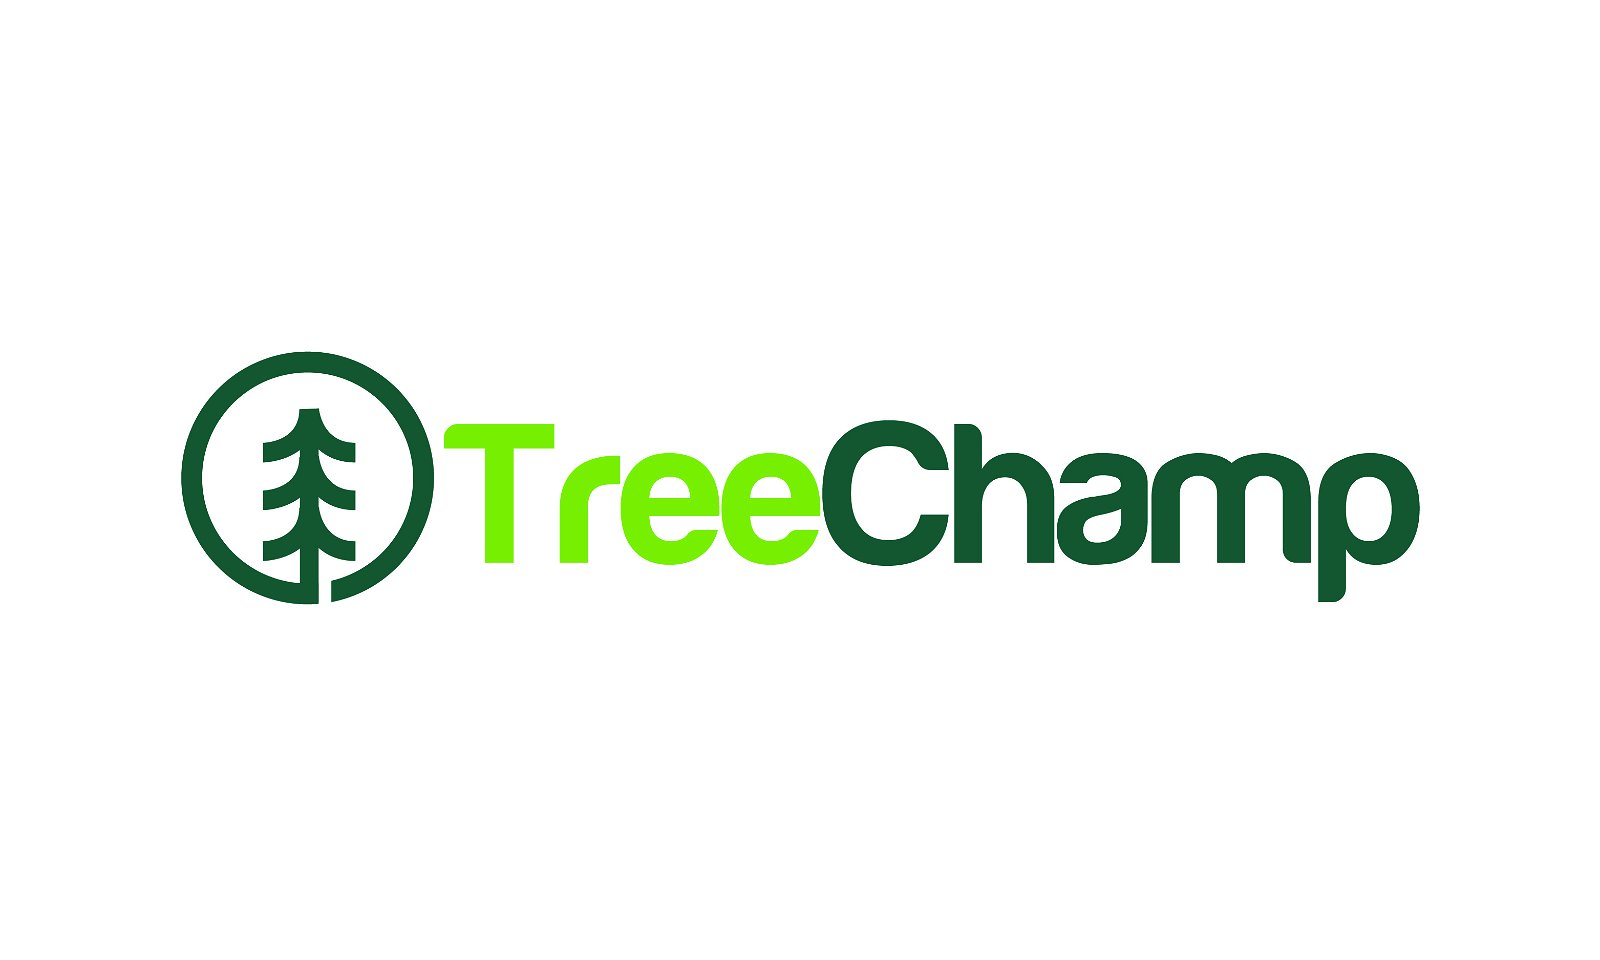 TreeChamp.com - Creative brandable domain for sale